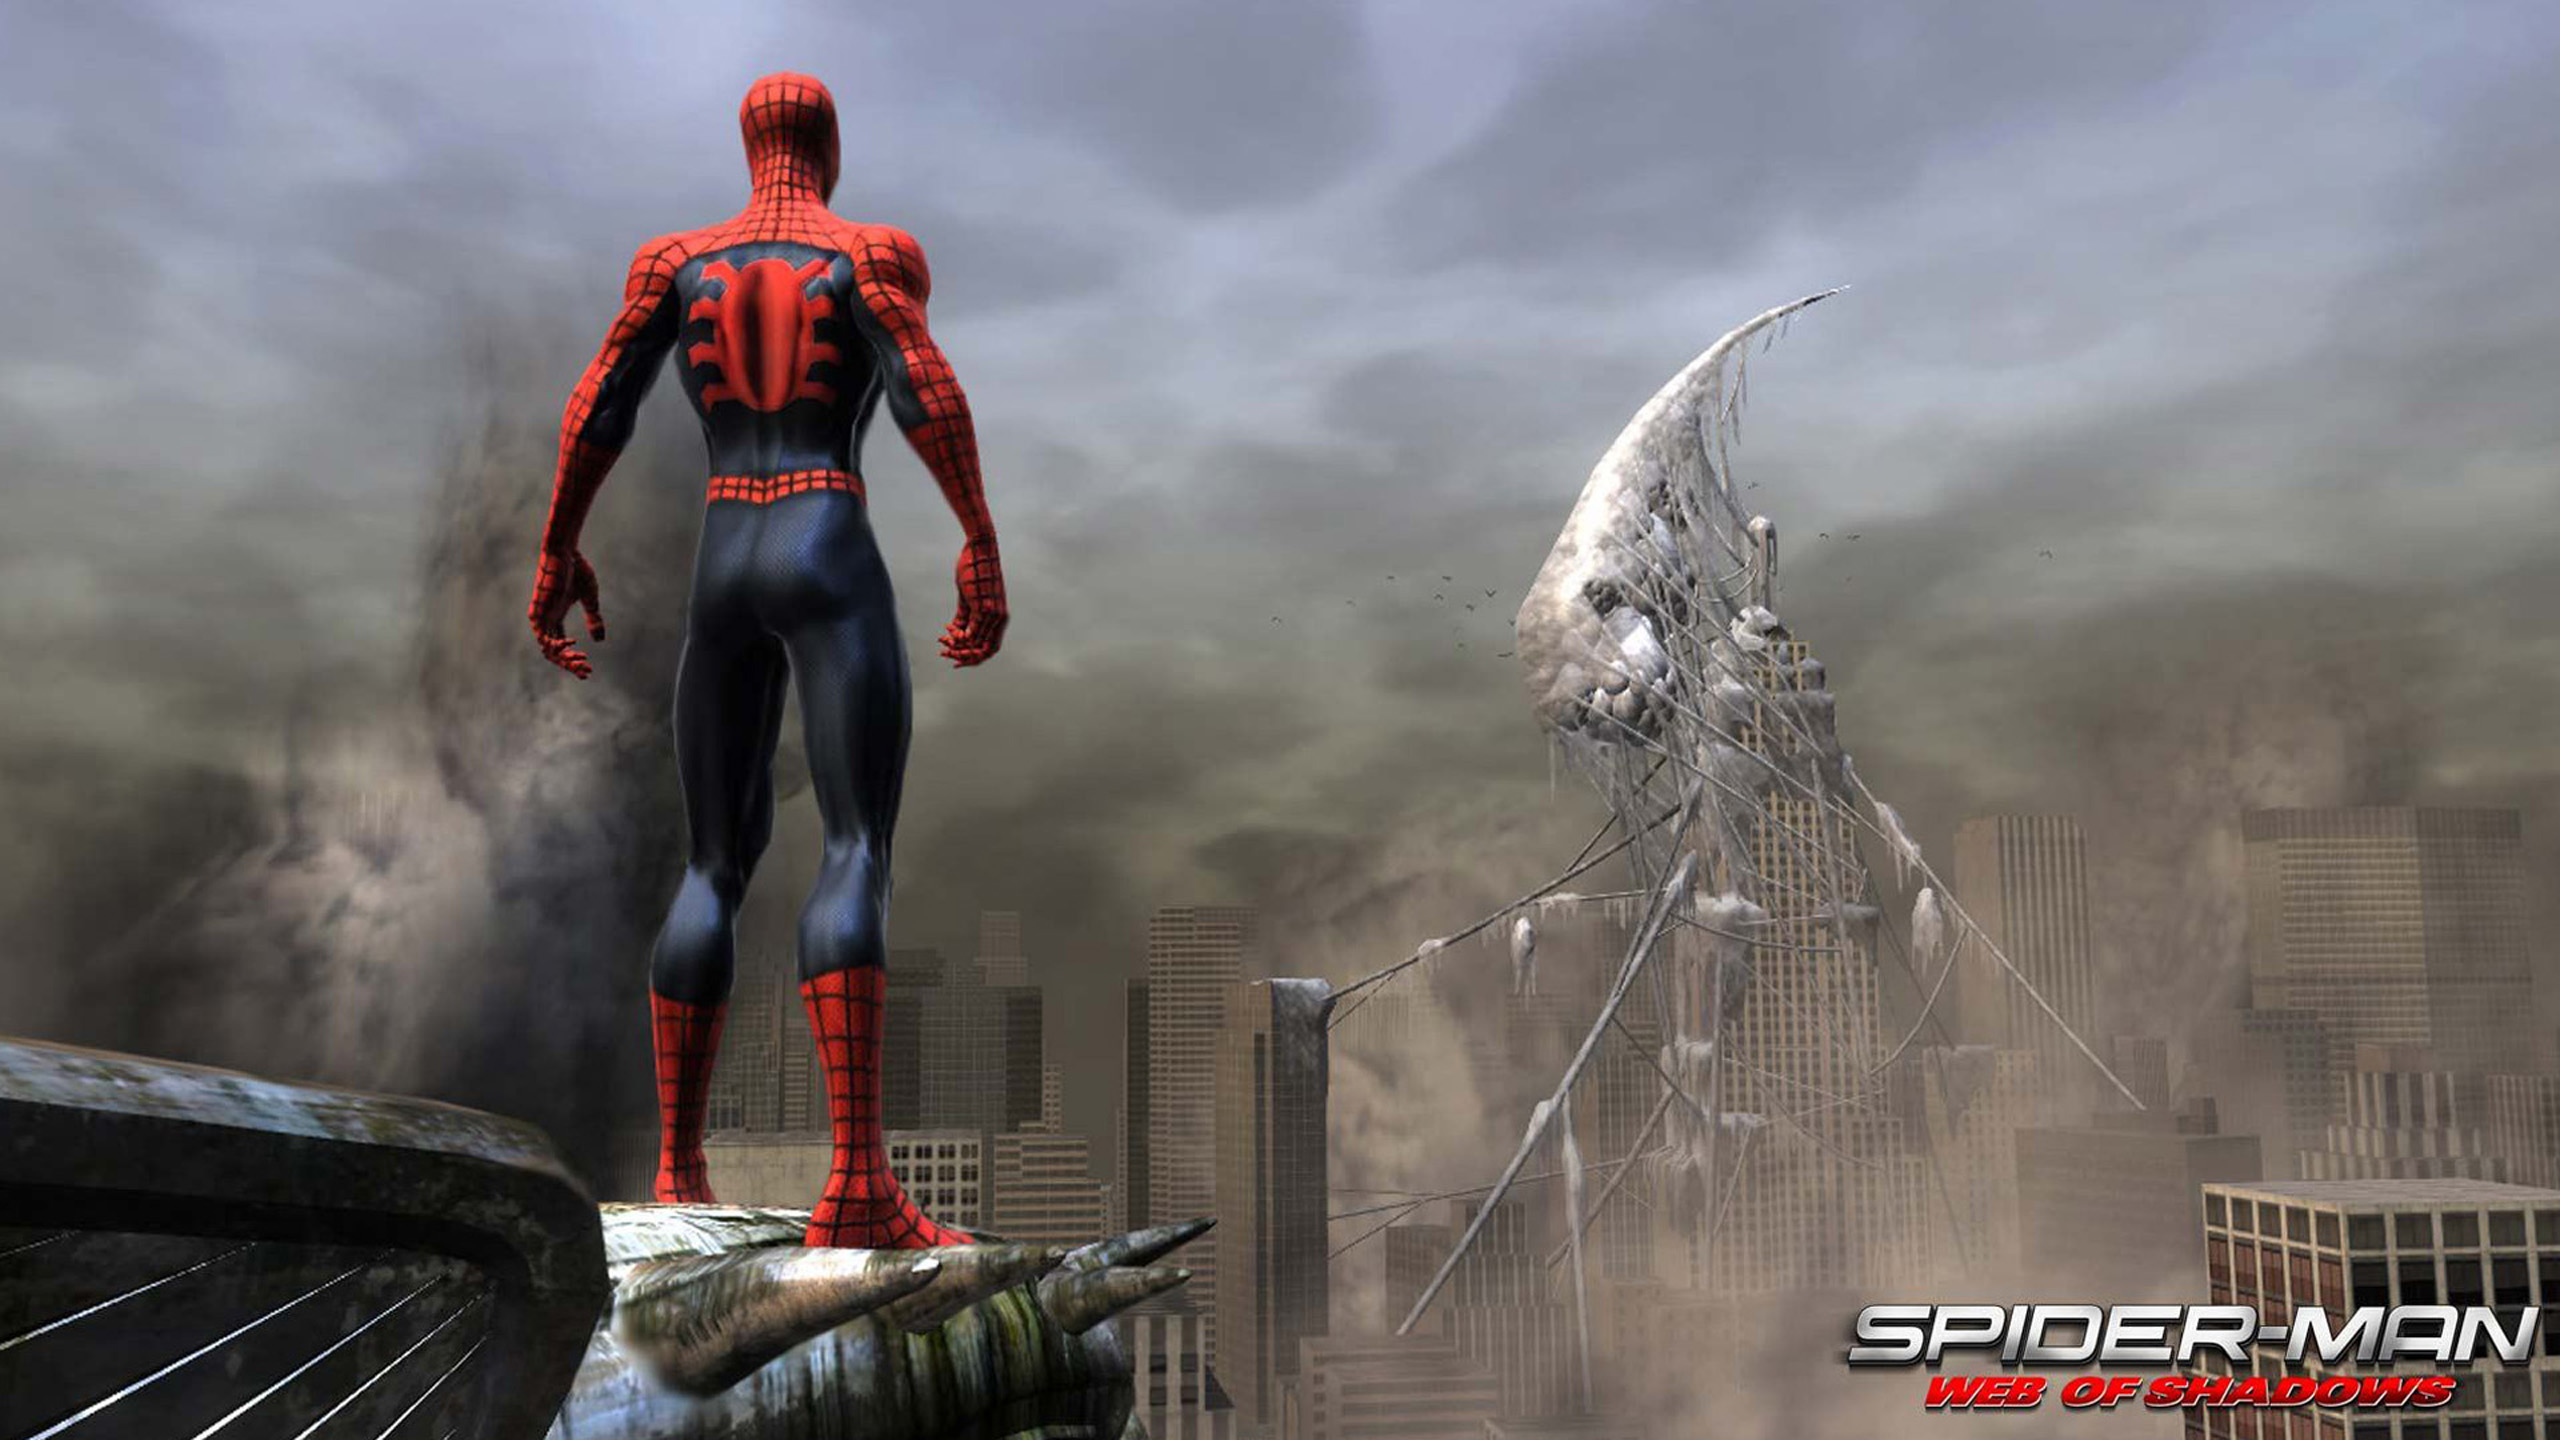 Hollywood movie Spiderman wallpaper, HD Desktop Backgrounds